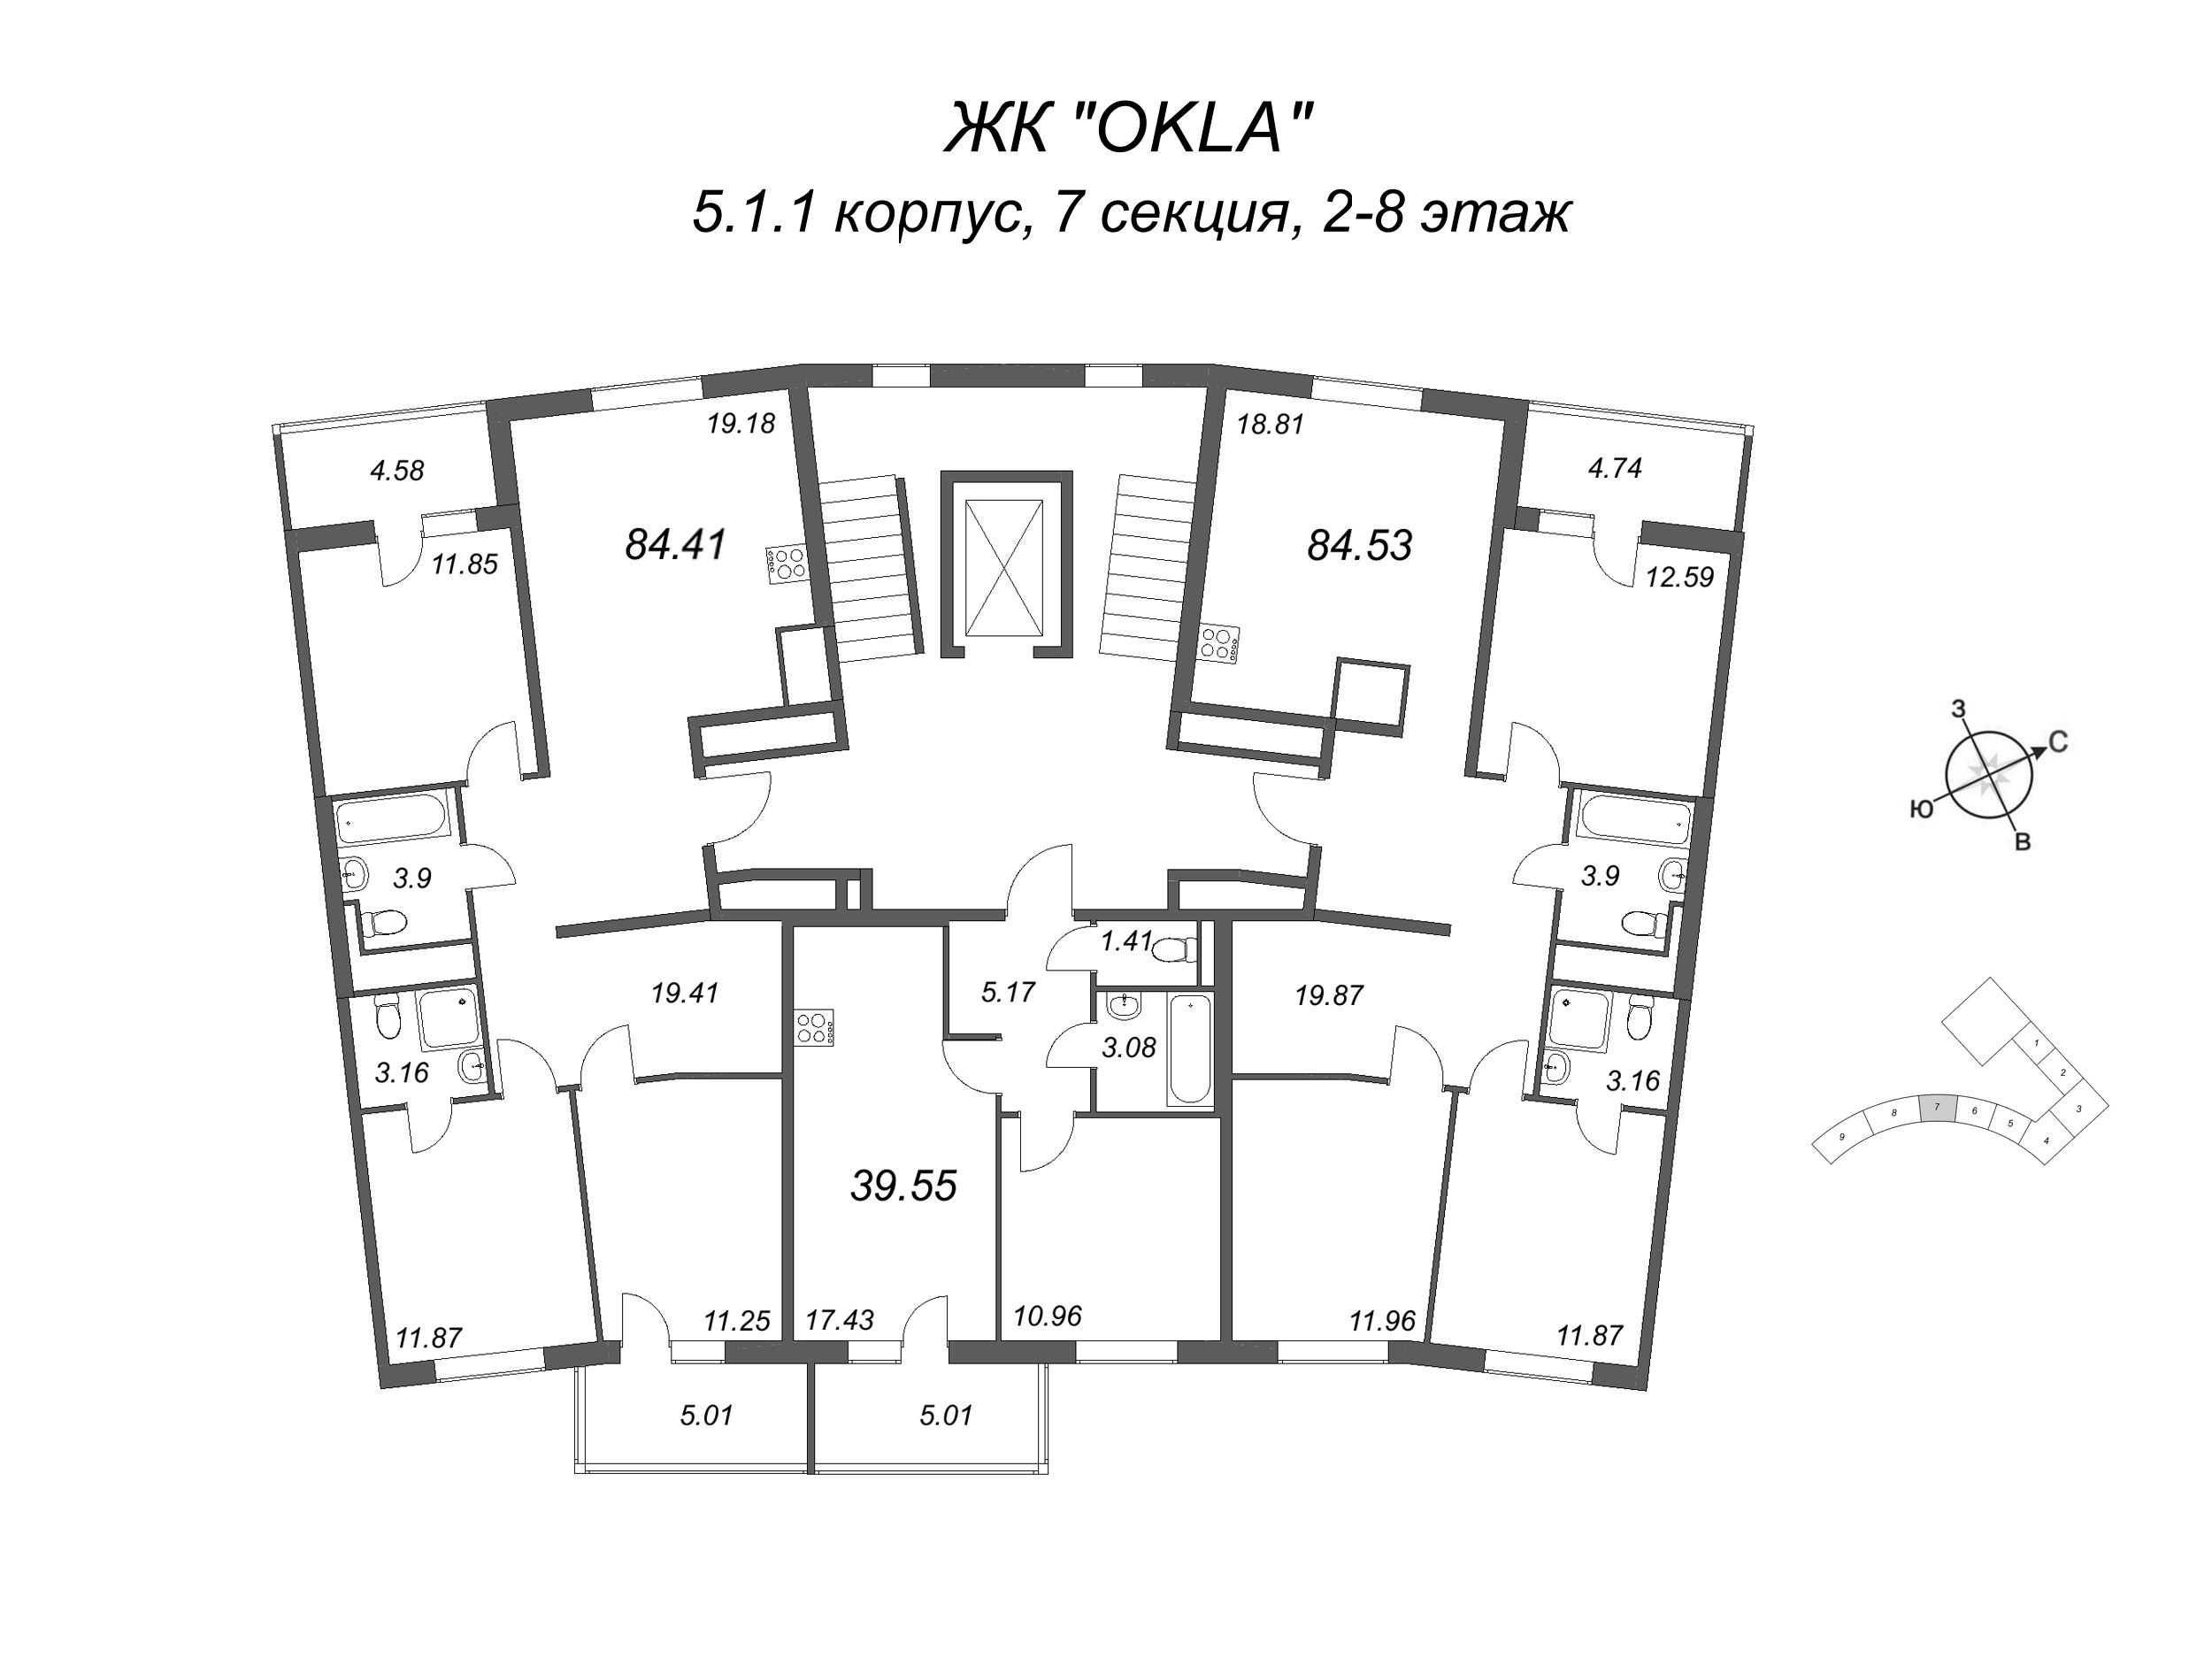 2-комнатная (Евро) квартира, 43.05 м² - планировка этажа